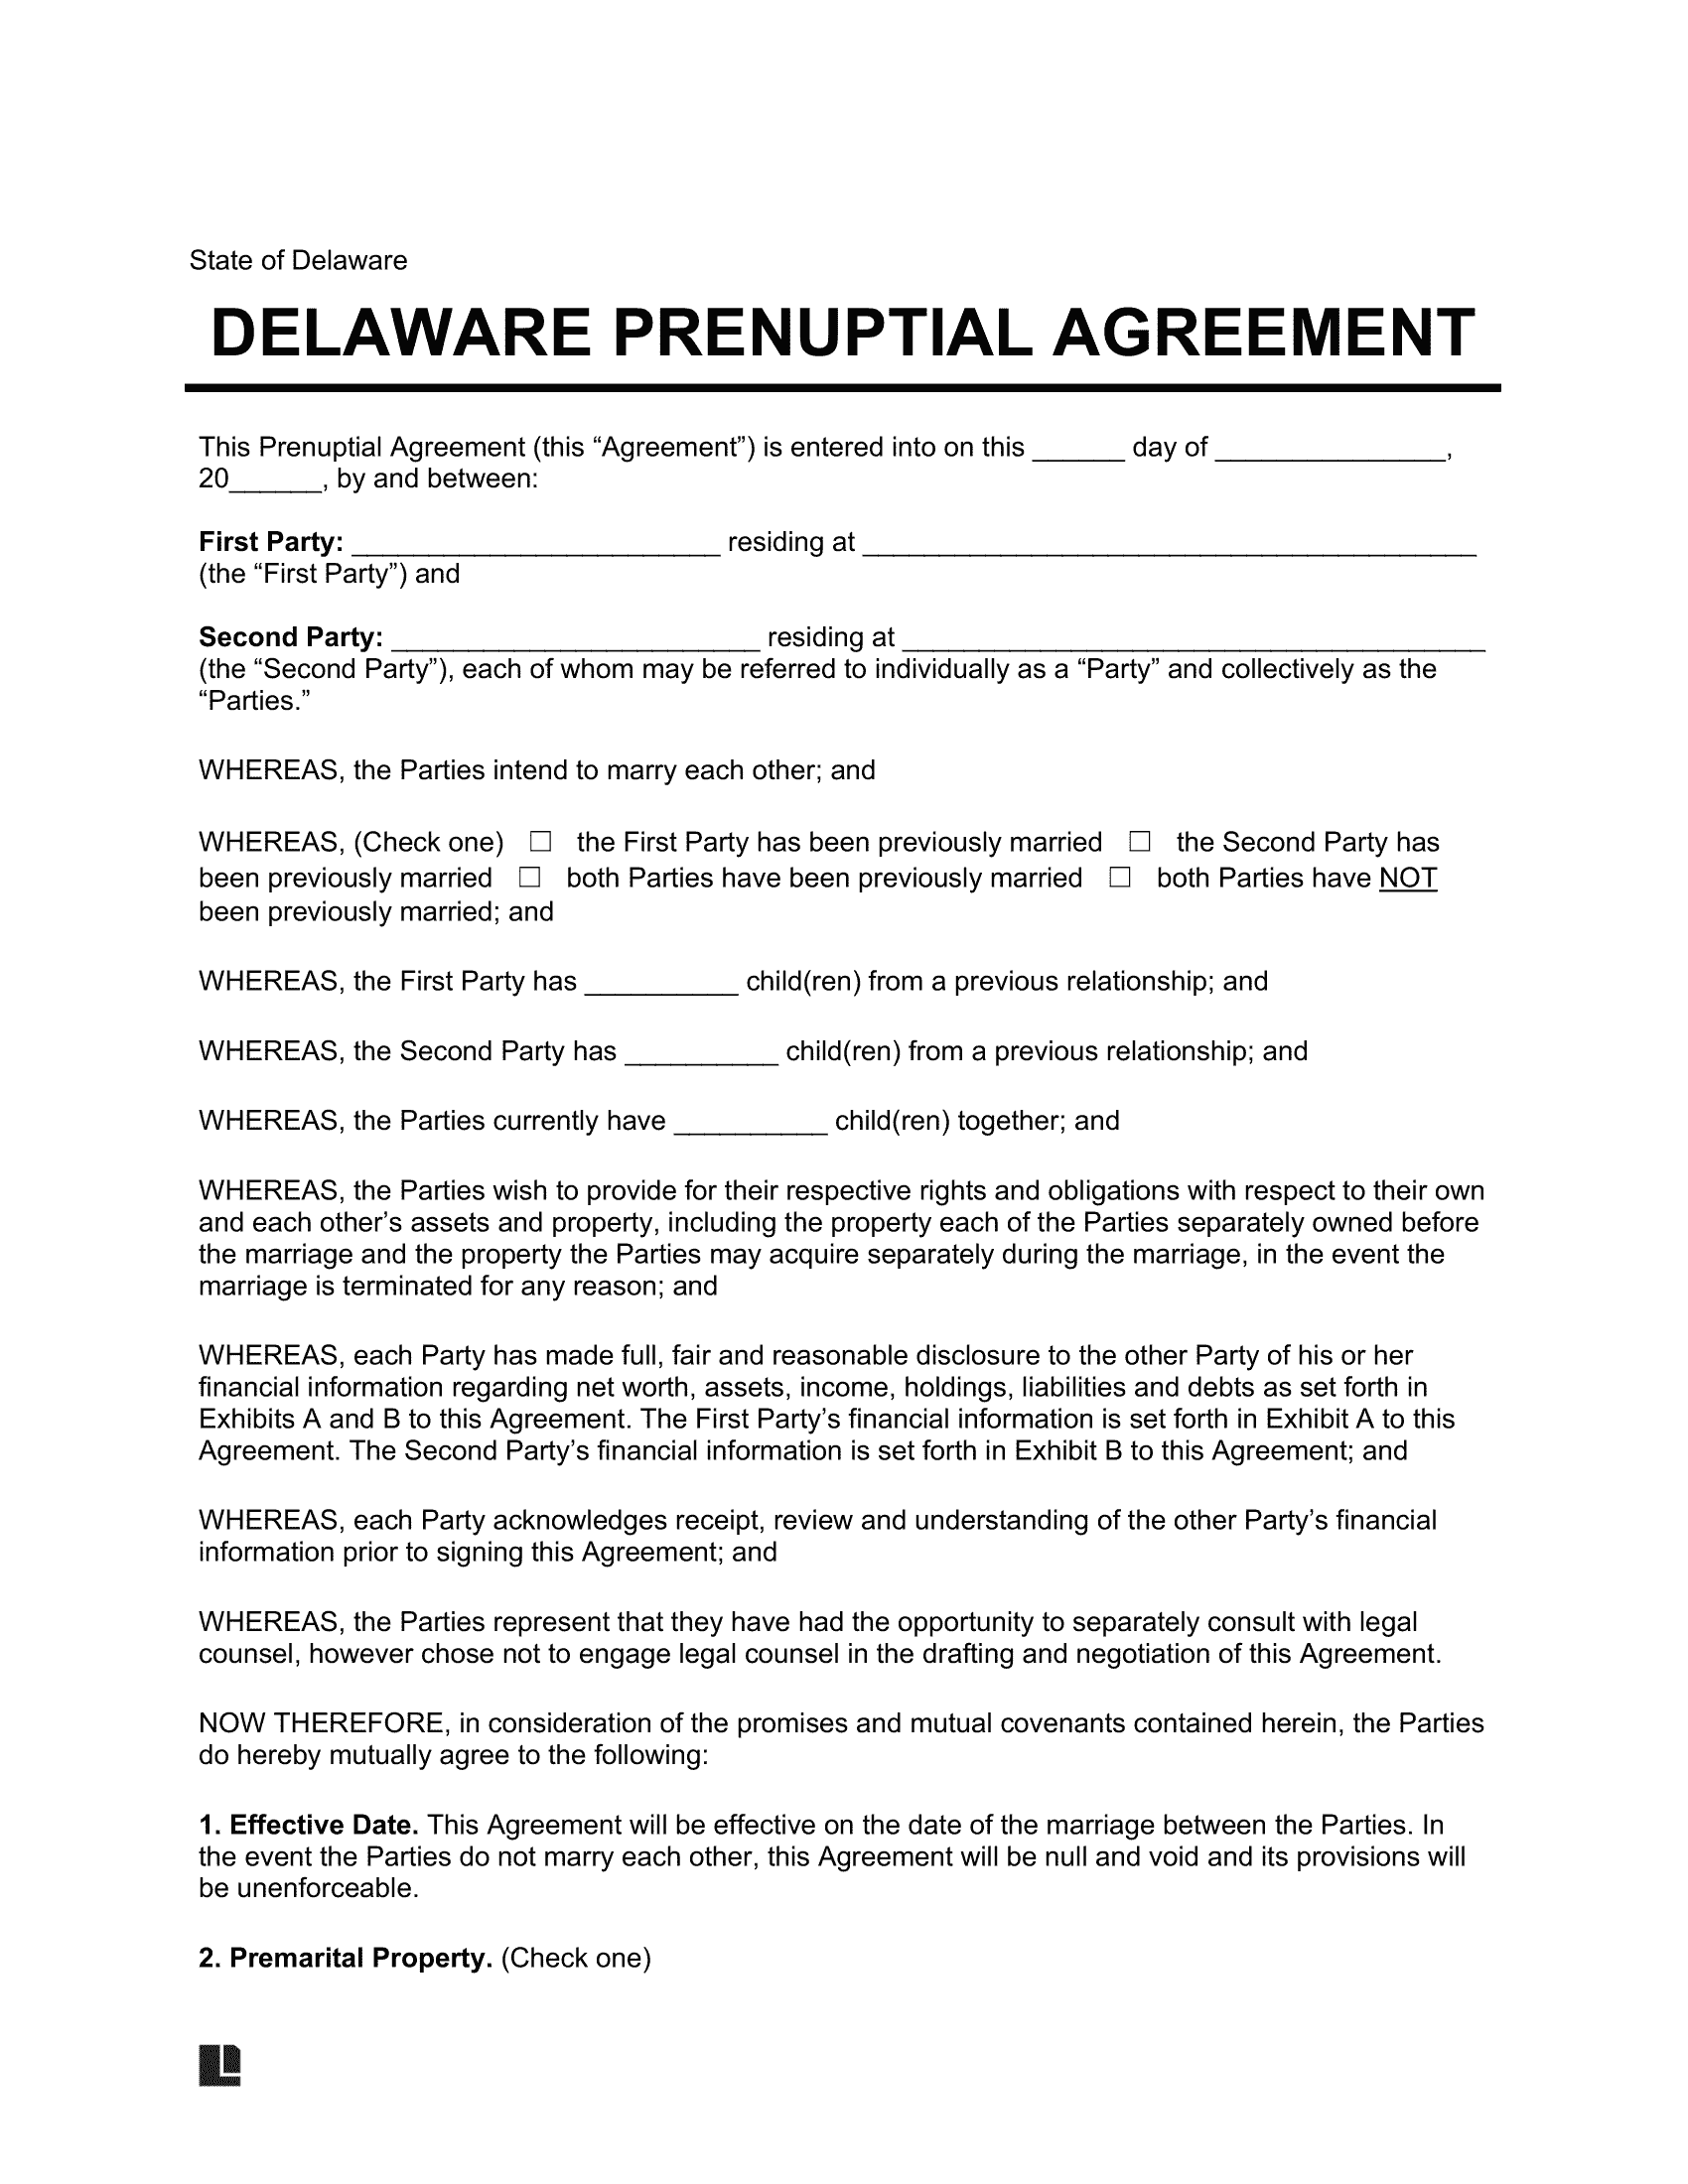 Delaware Prenuptial Agreement Template